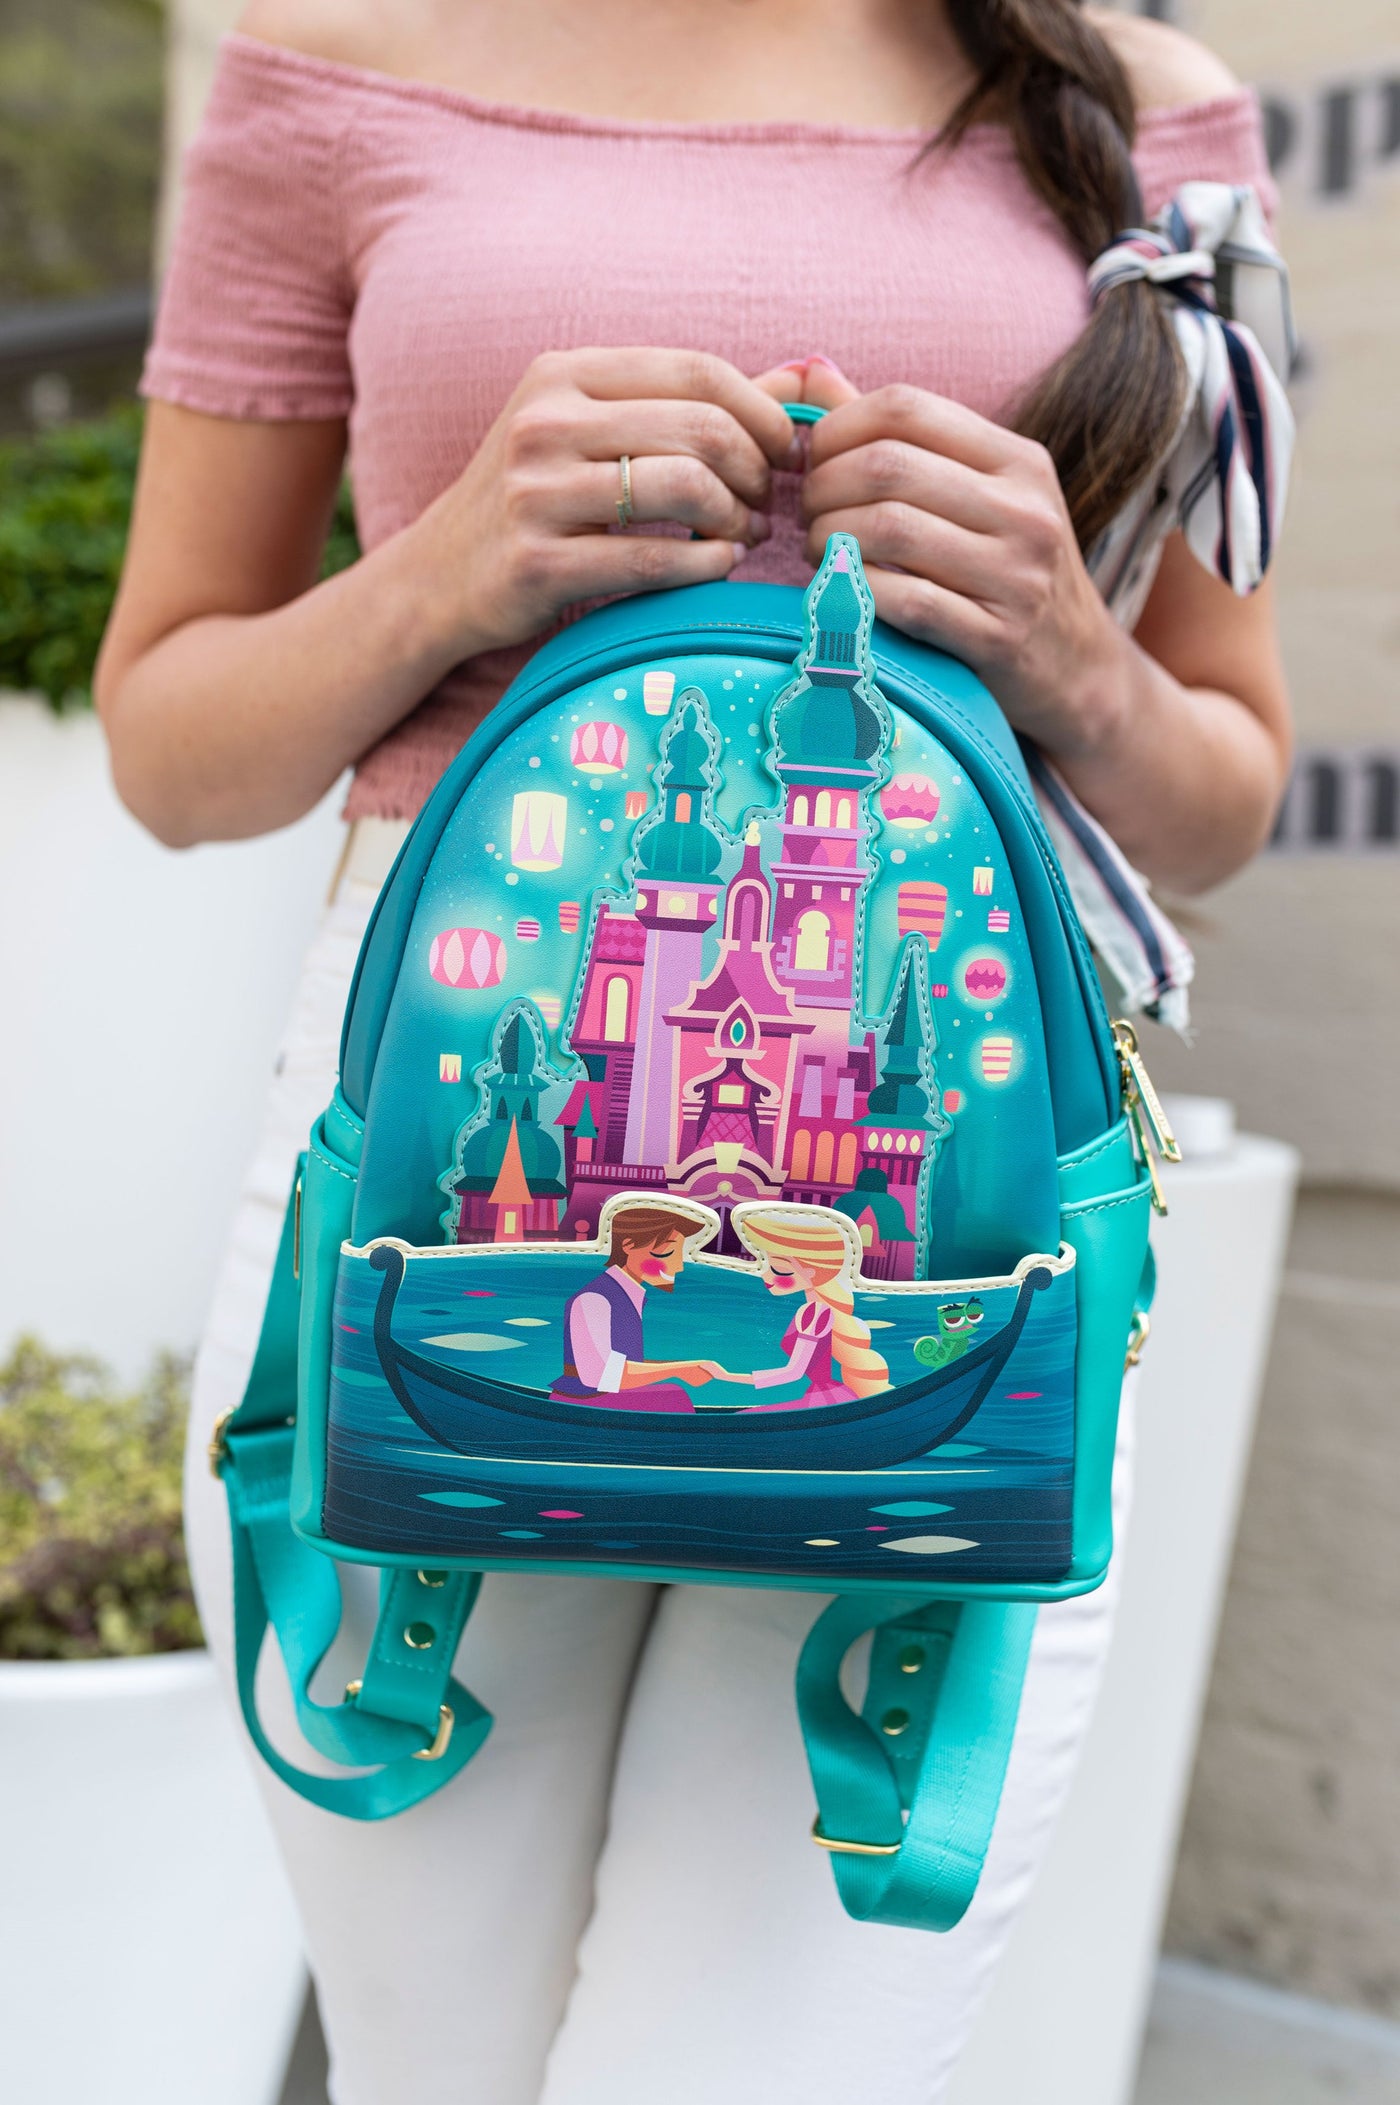 Loungefly Tangled Disney Princess Castle Mini Backpack